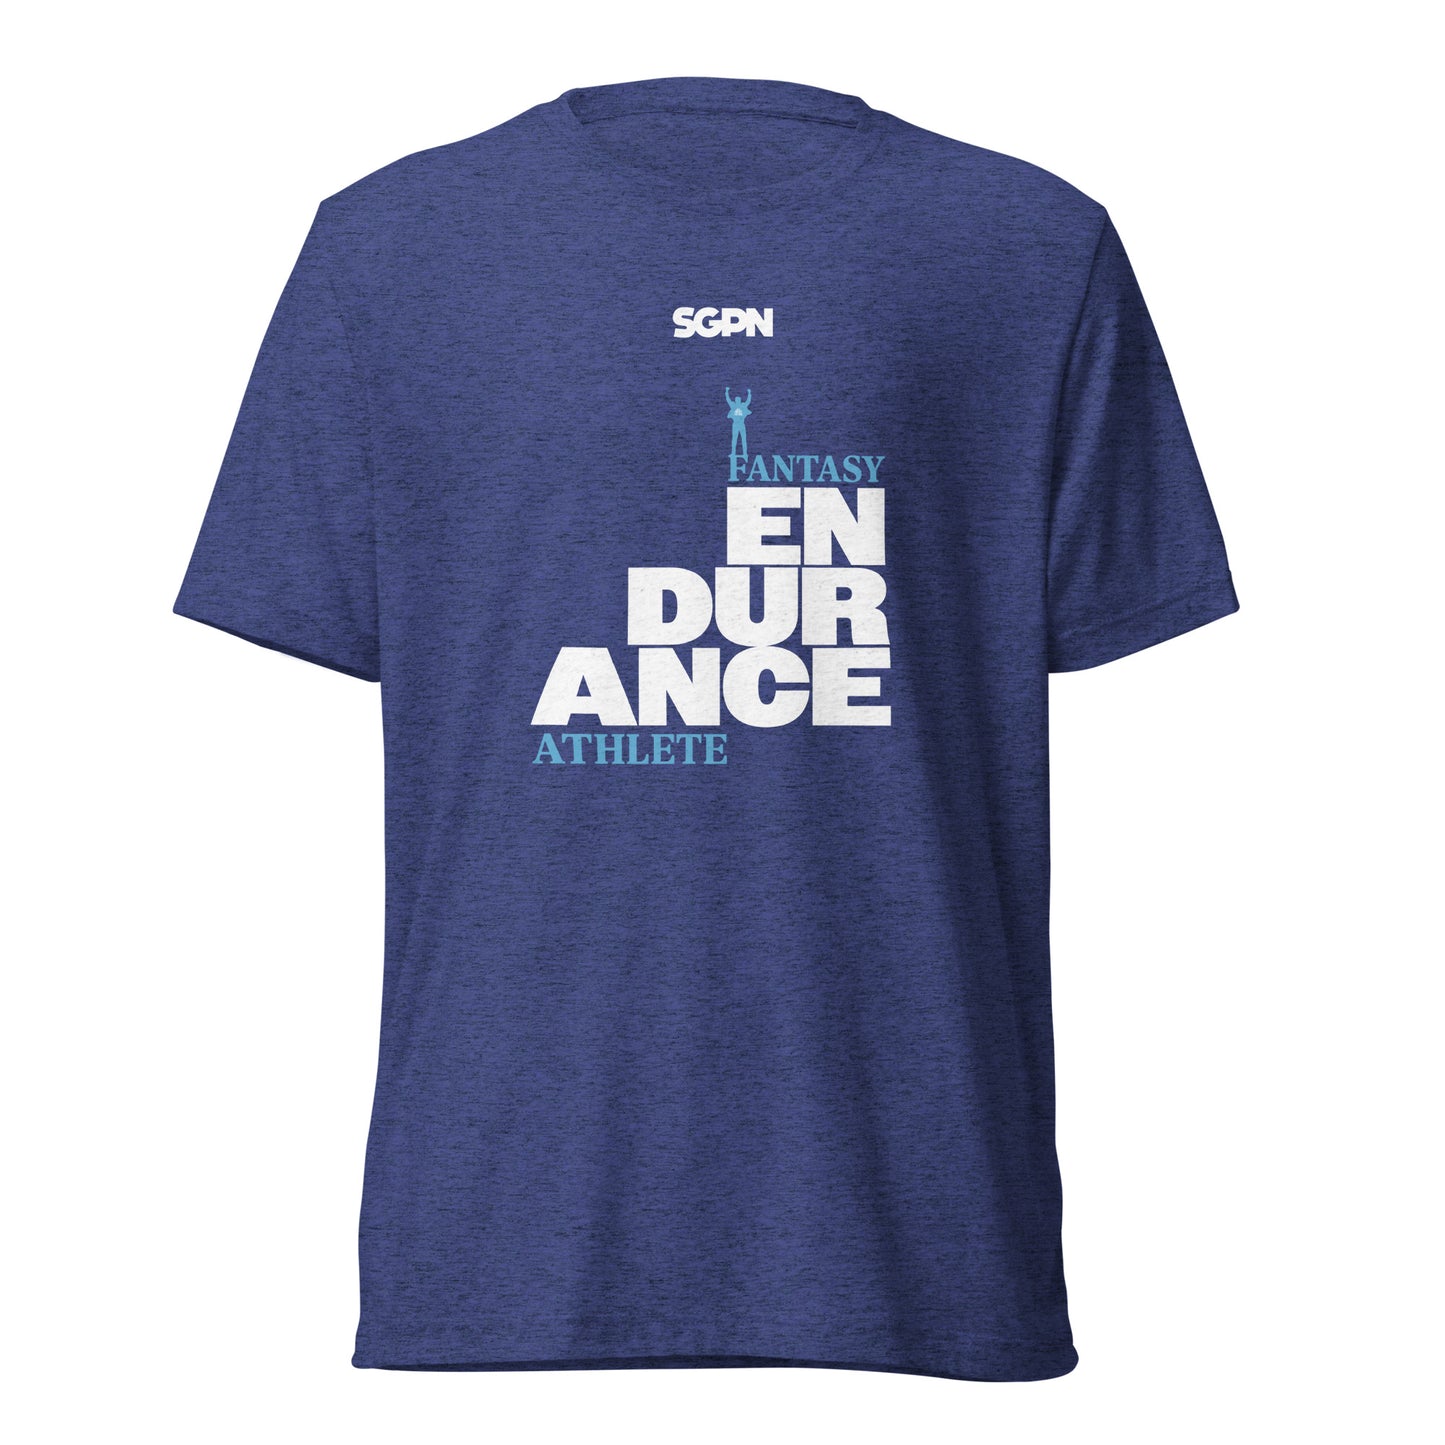 Fantasy Endurance Athlete - Short sleeve t-shirt